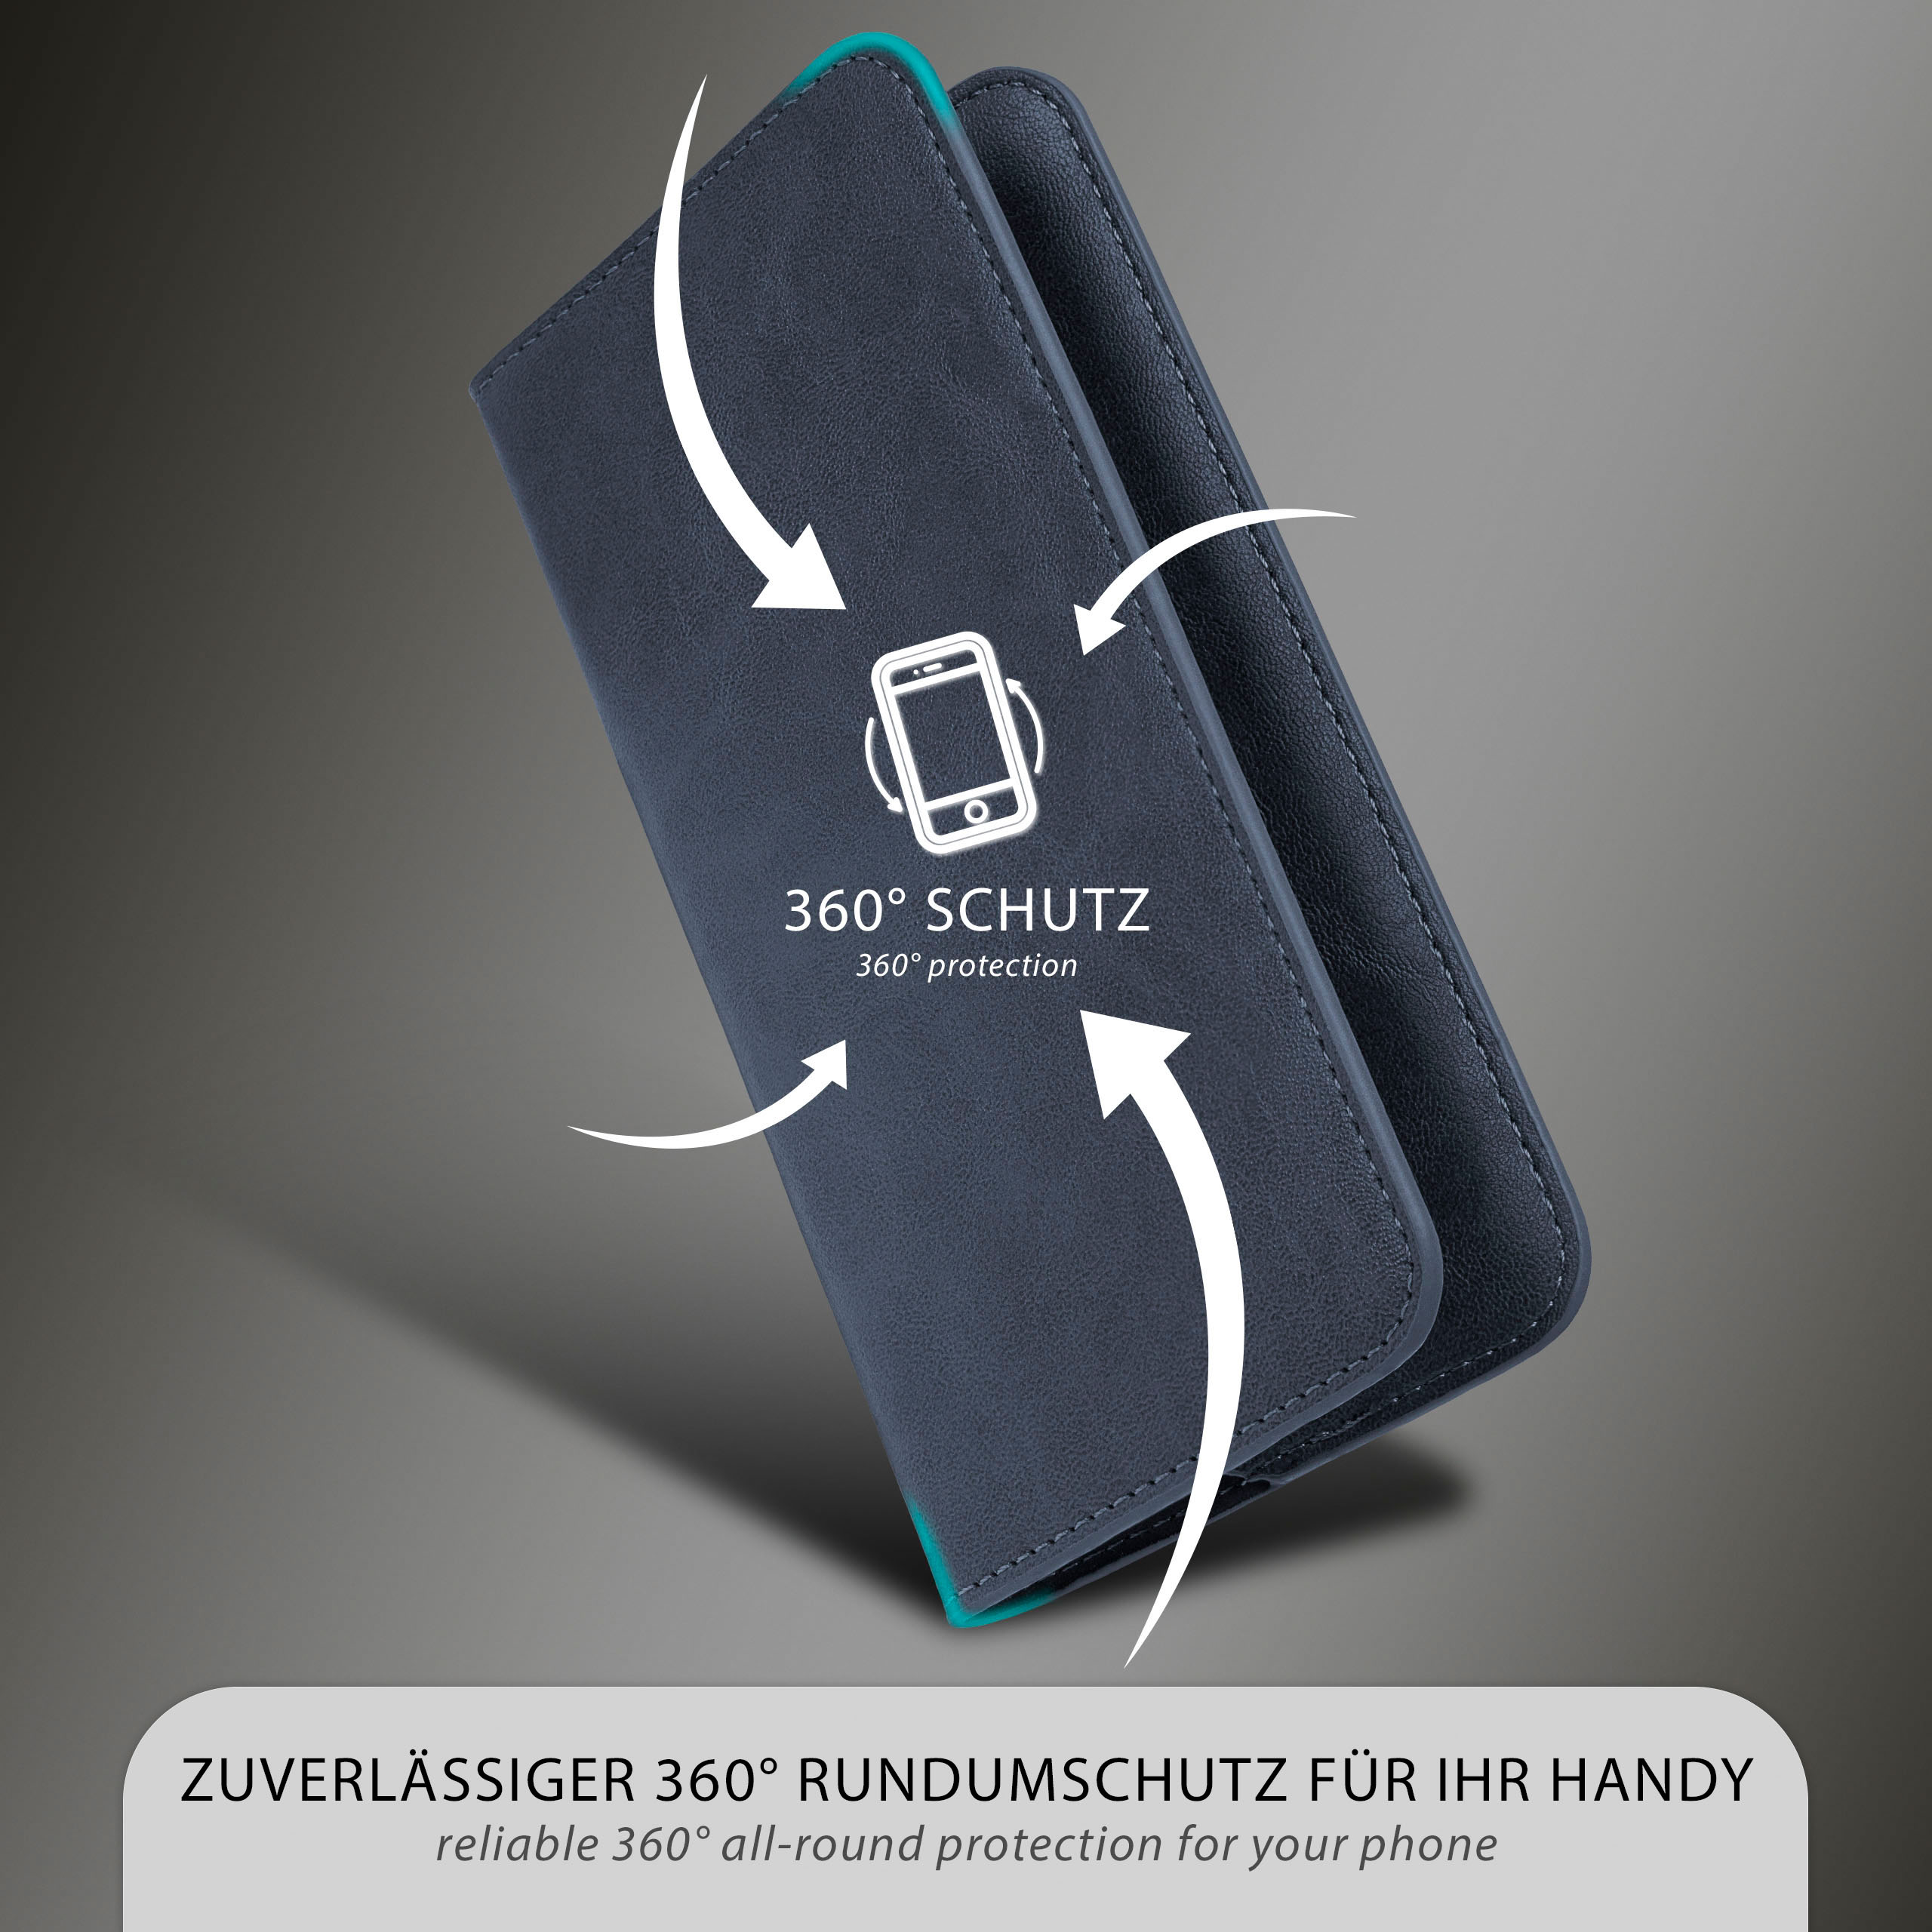 MOEX Purse Case, Compact, Dunkelblau Flip Z3 Cover, Xperia Sony